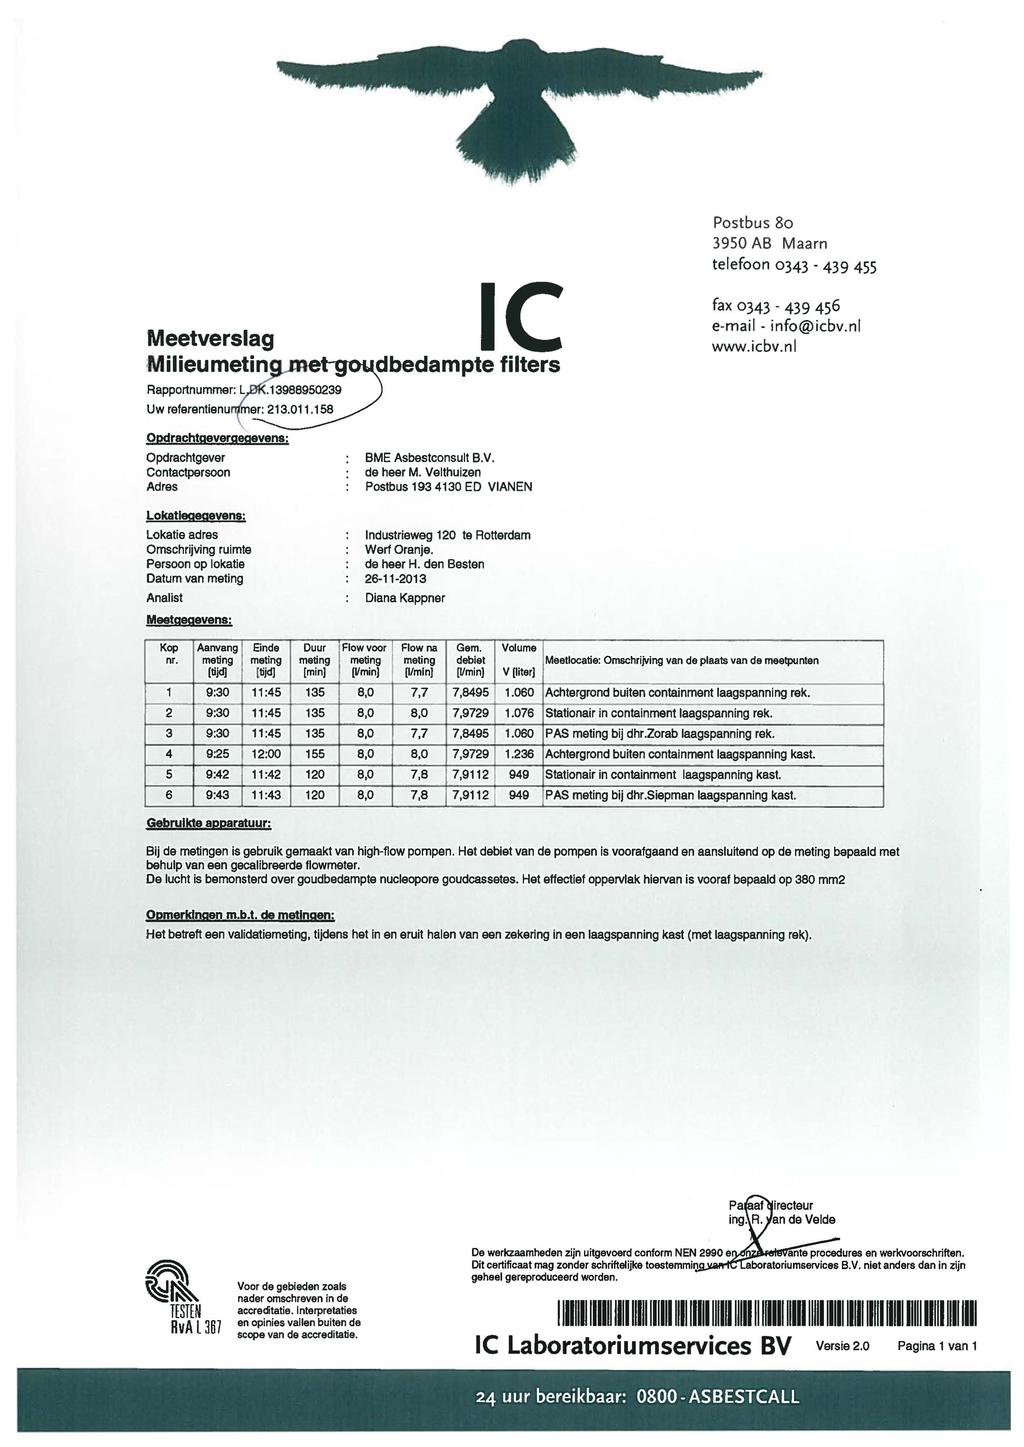 ,Rapportnummer: L IC r-~n~.-- dbedampte filters Postbus 8o 3950 AB Maarn telefoon 0343-439 455 fax 0343-439 456 e-mail - info@icbv.nl www.icbv.nl Lokat!